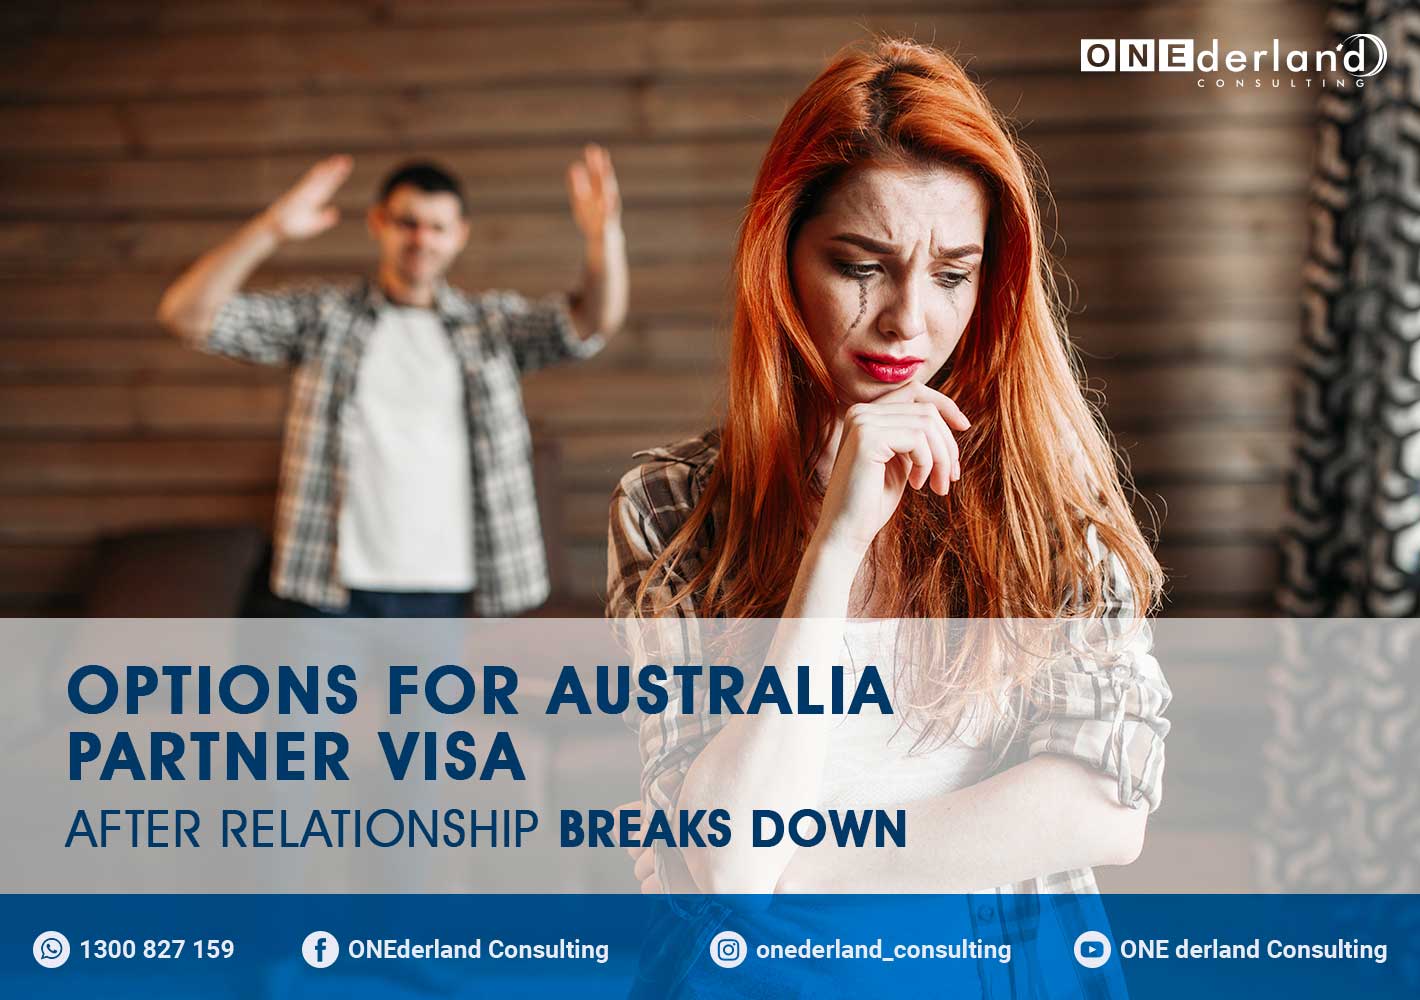 Options for Australia Partner Visa After Relationship Breaks Down